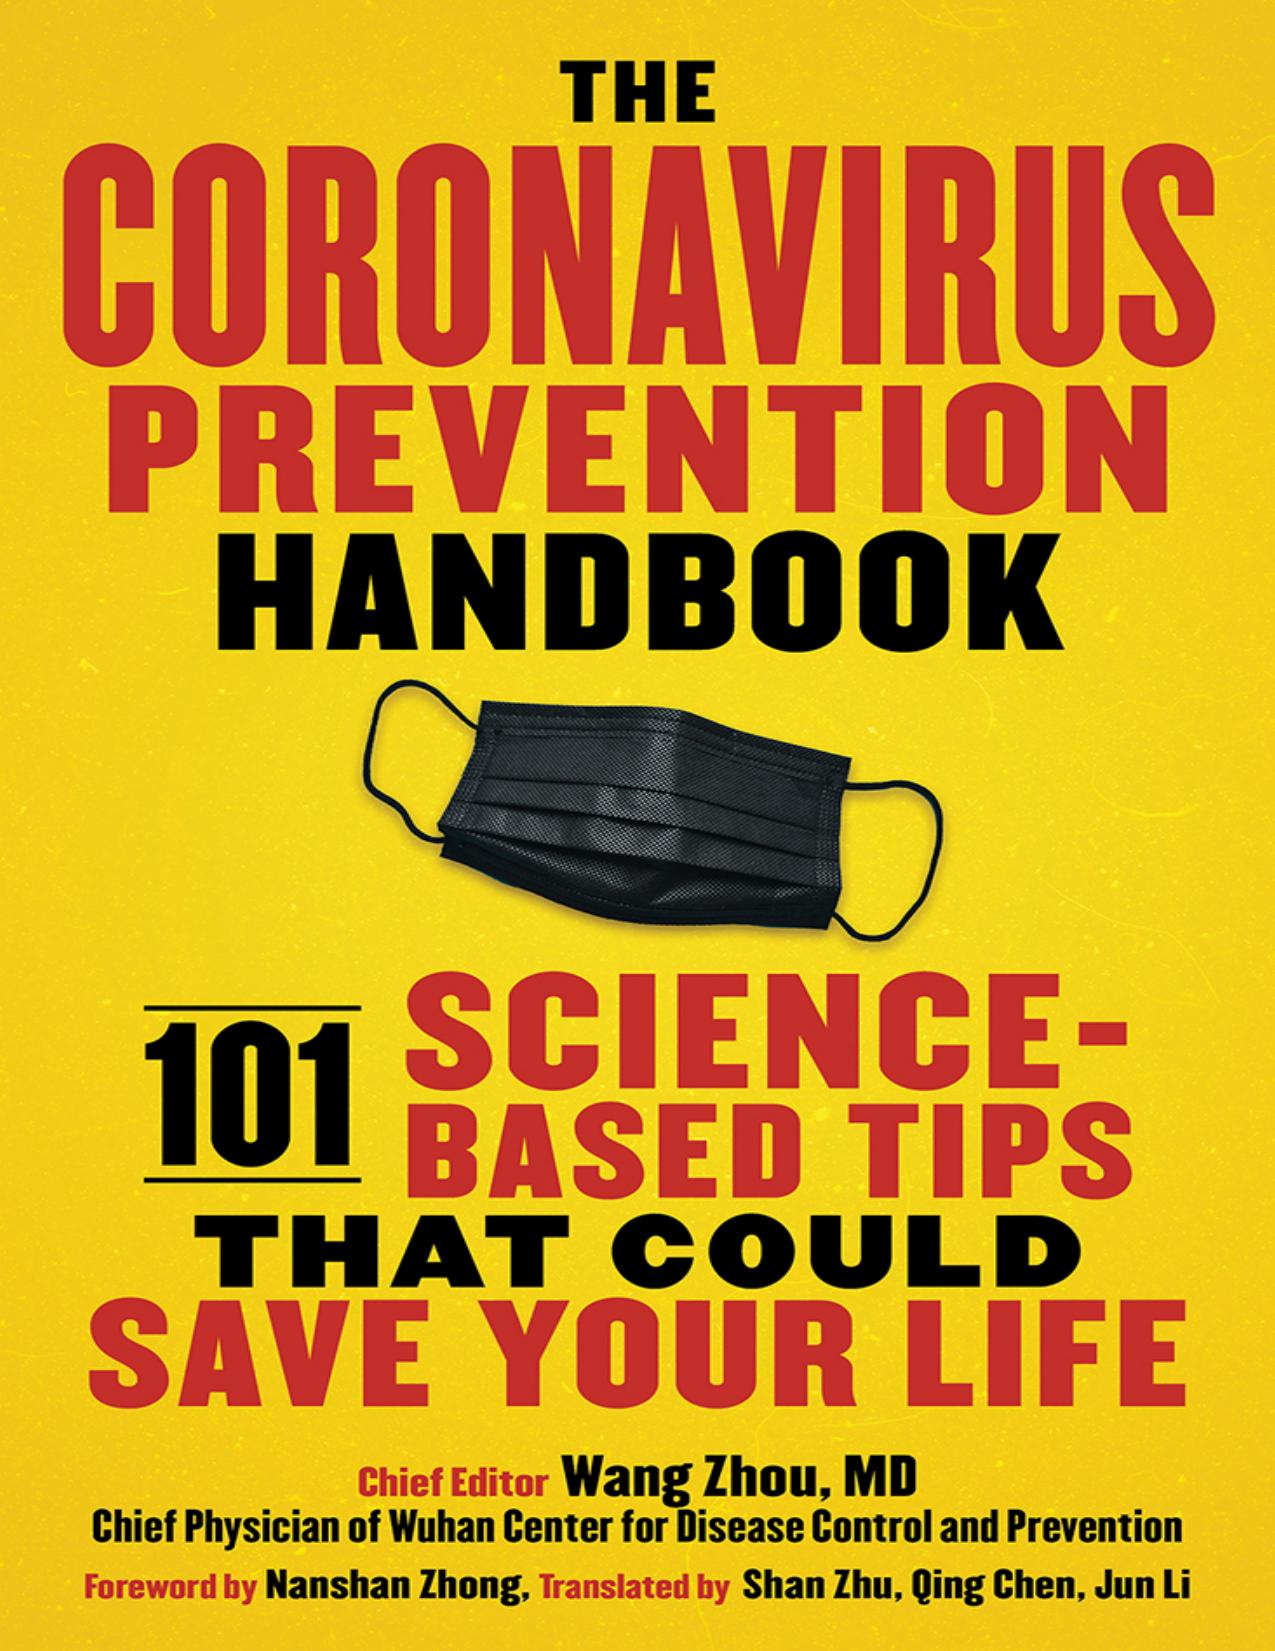 The Coronavirus Prevention Handbook by Wang Zhou